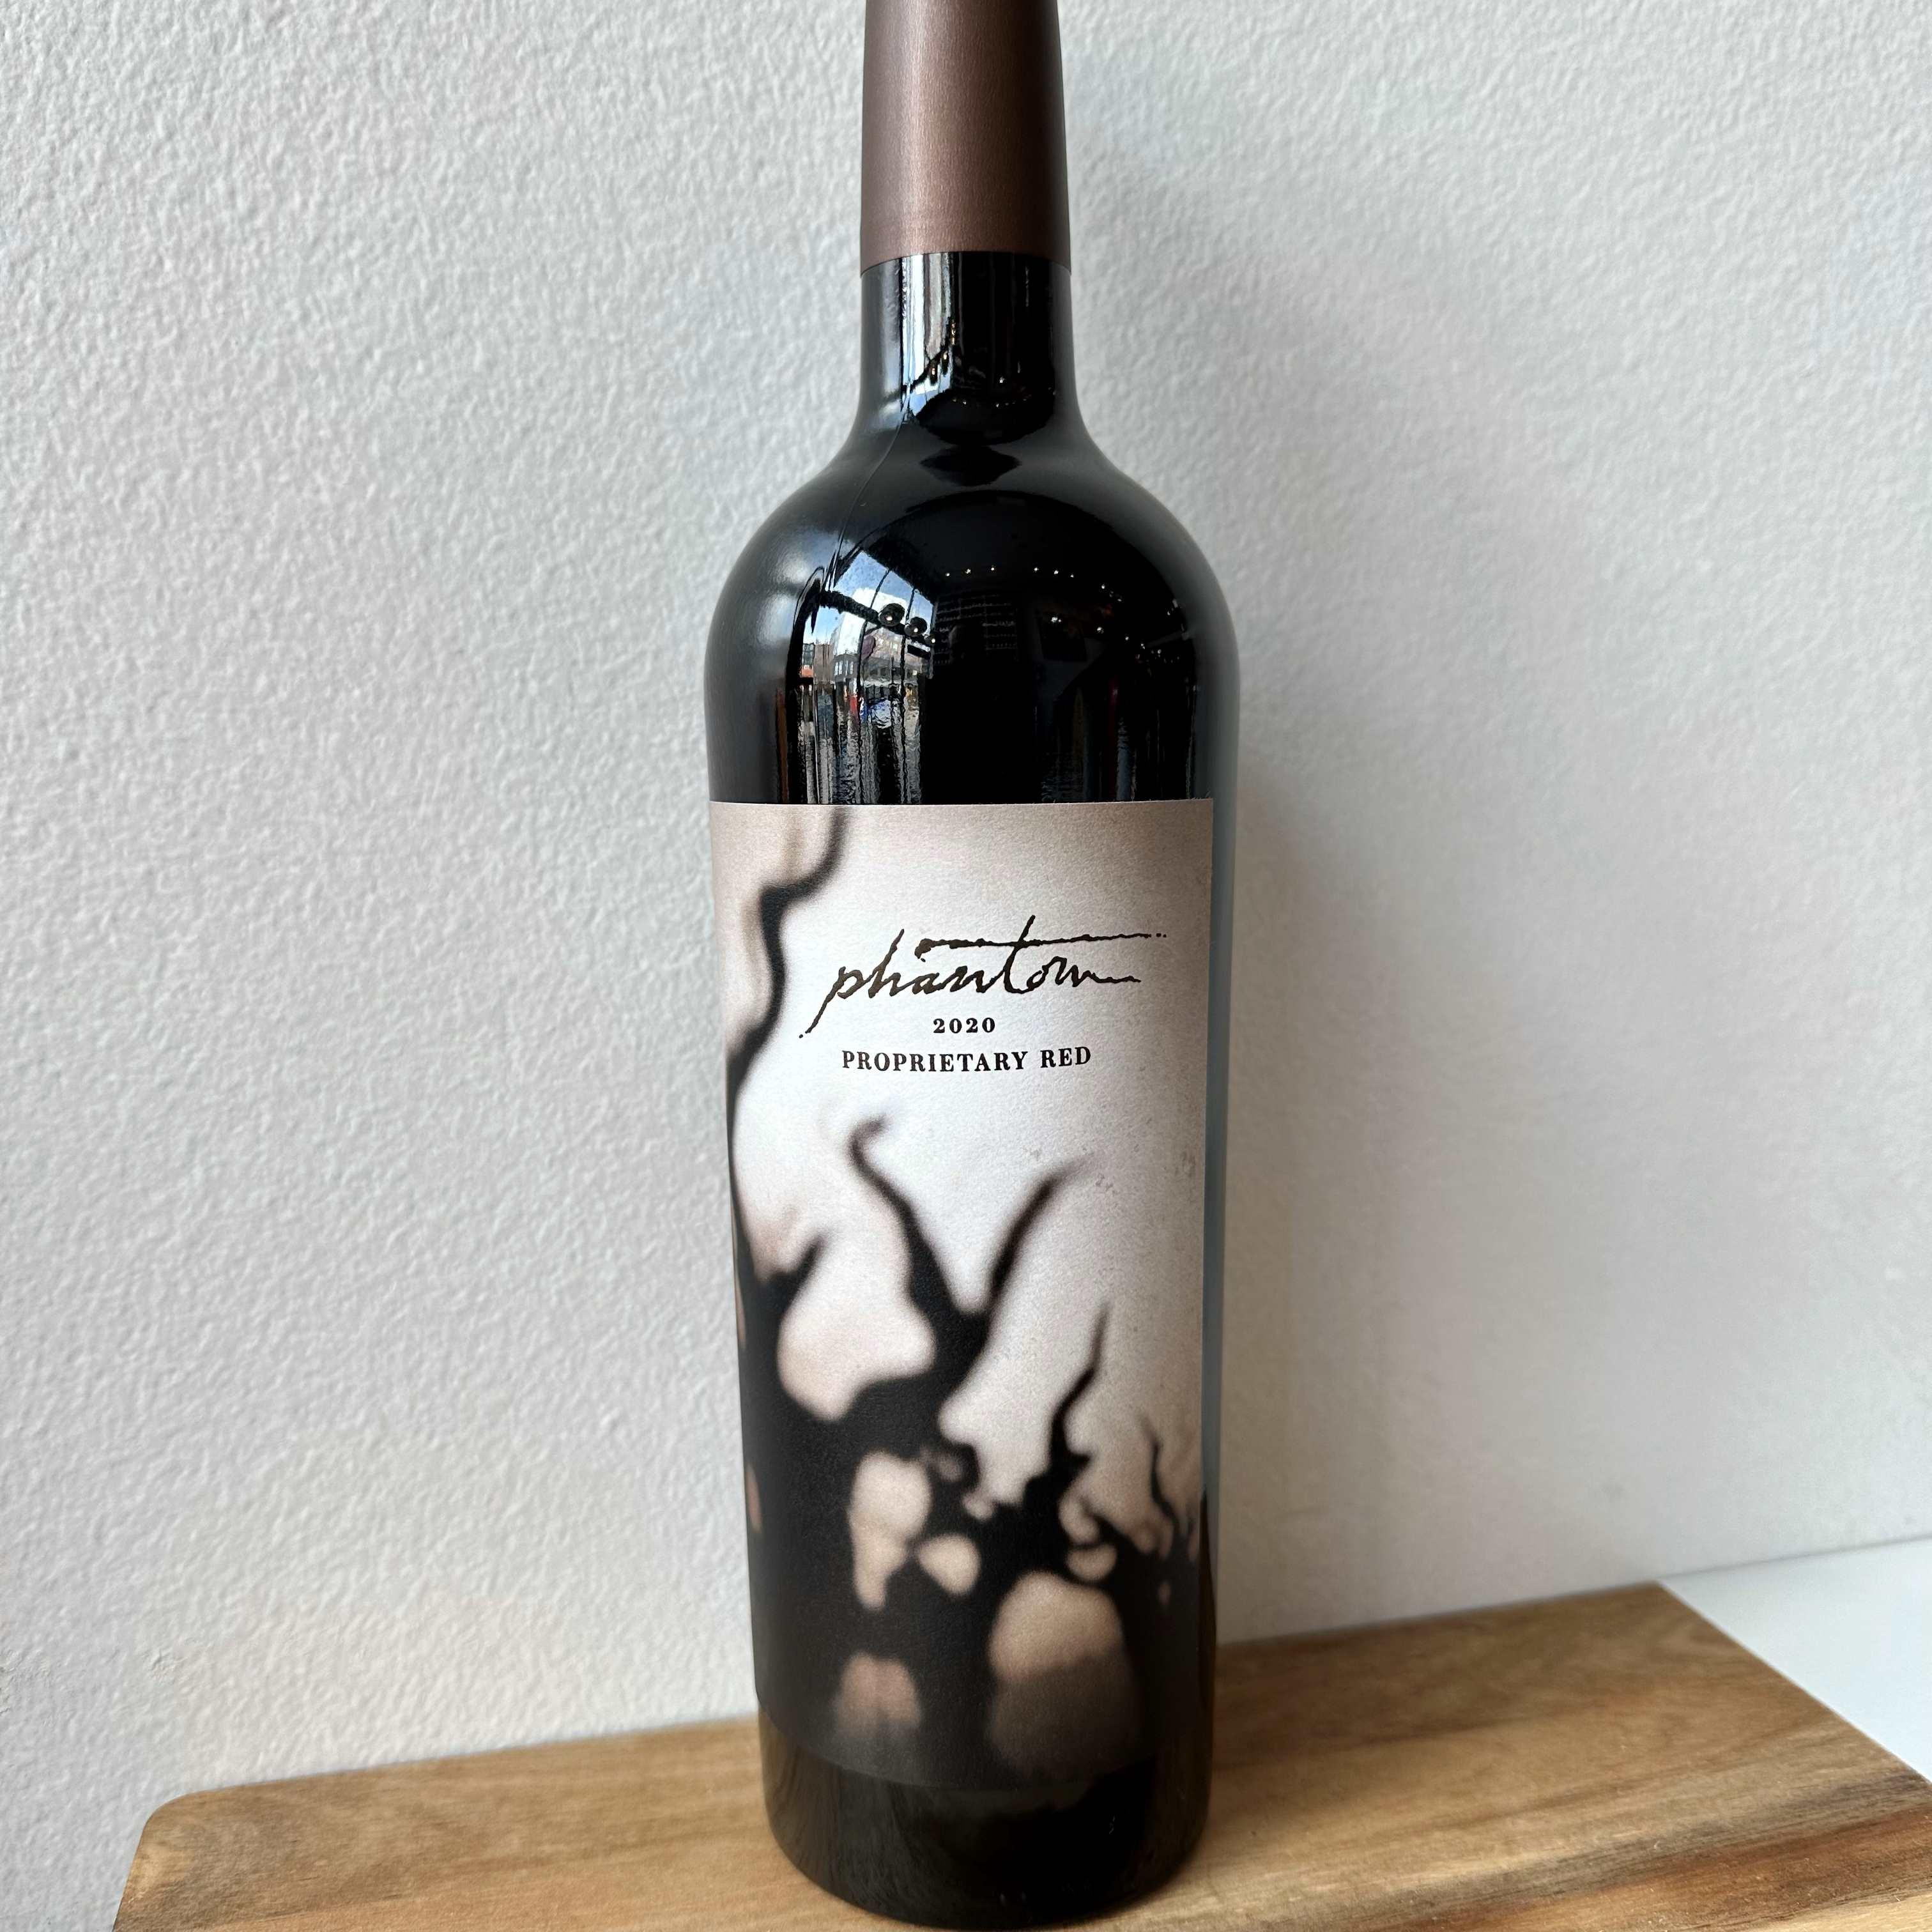 Bogle Family Vineyards "Phantom" Proprietary Red Blend 2020 California